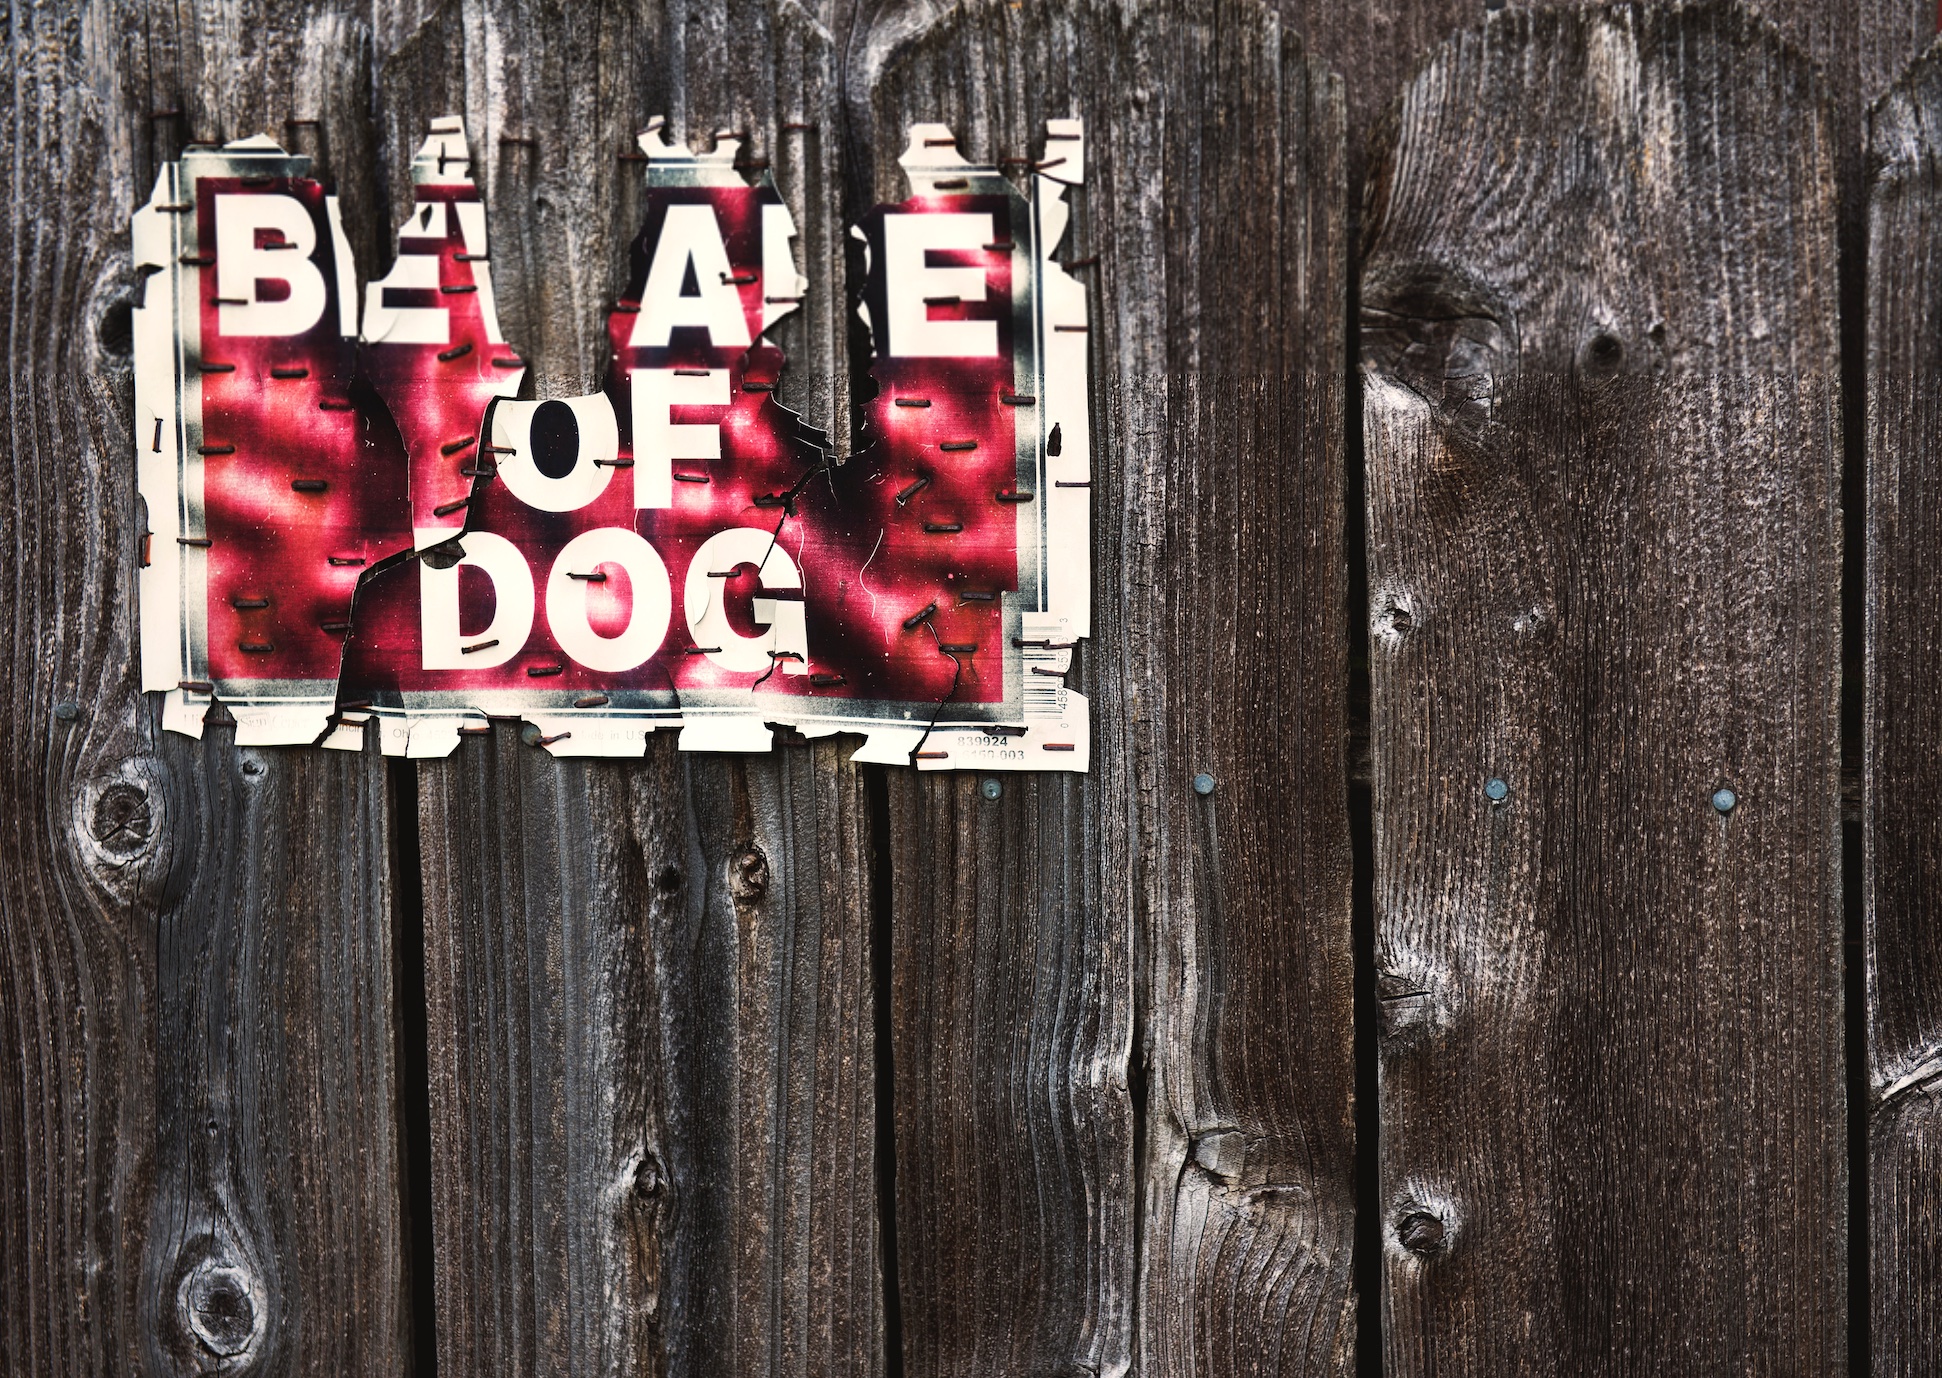 Tattered Beware of Dog sign stapled to fence; image by Tim Mossholder, via Unsplash.com.